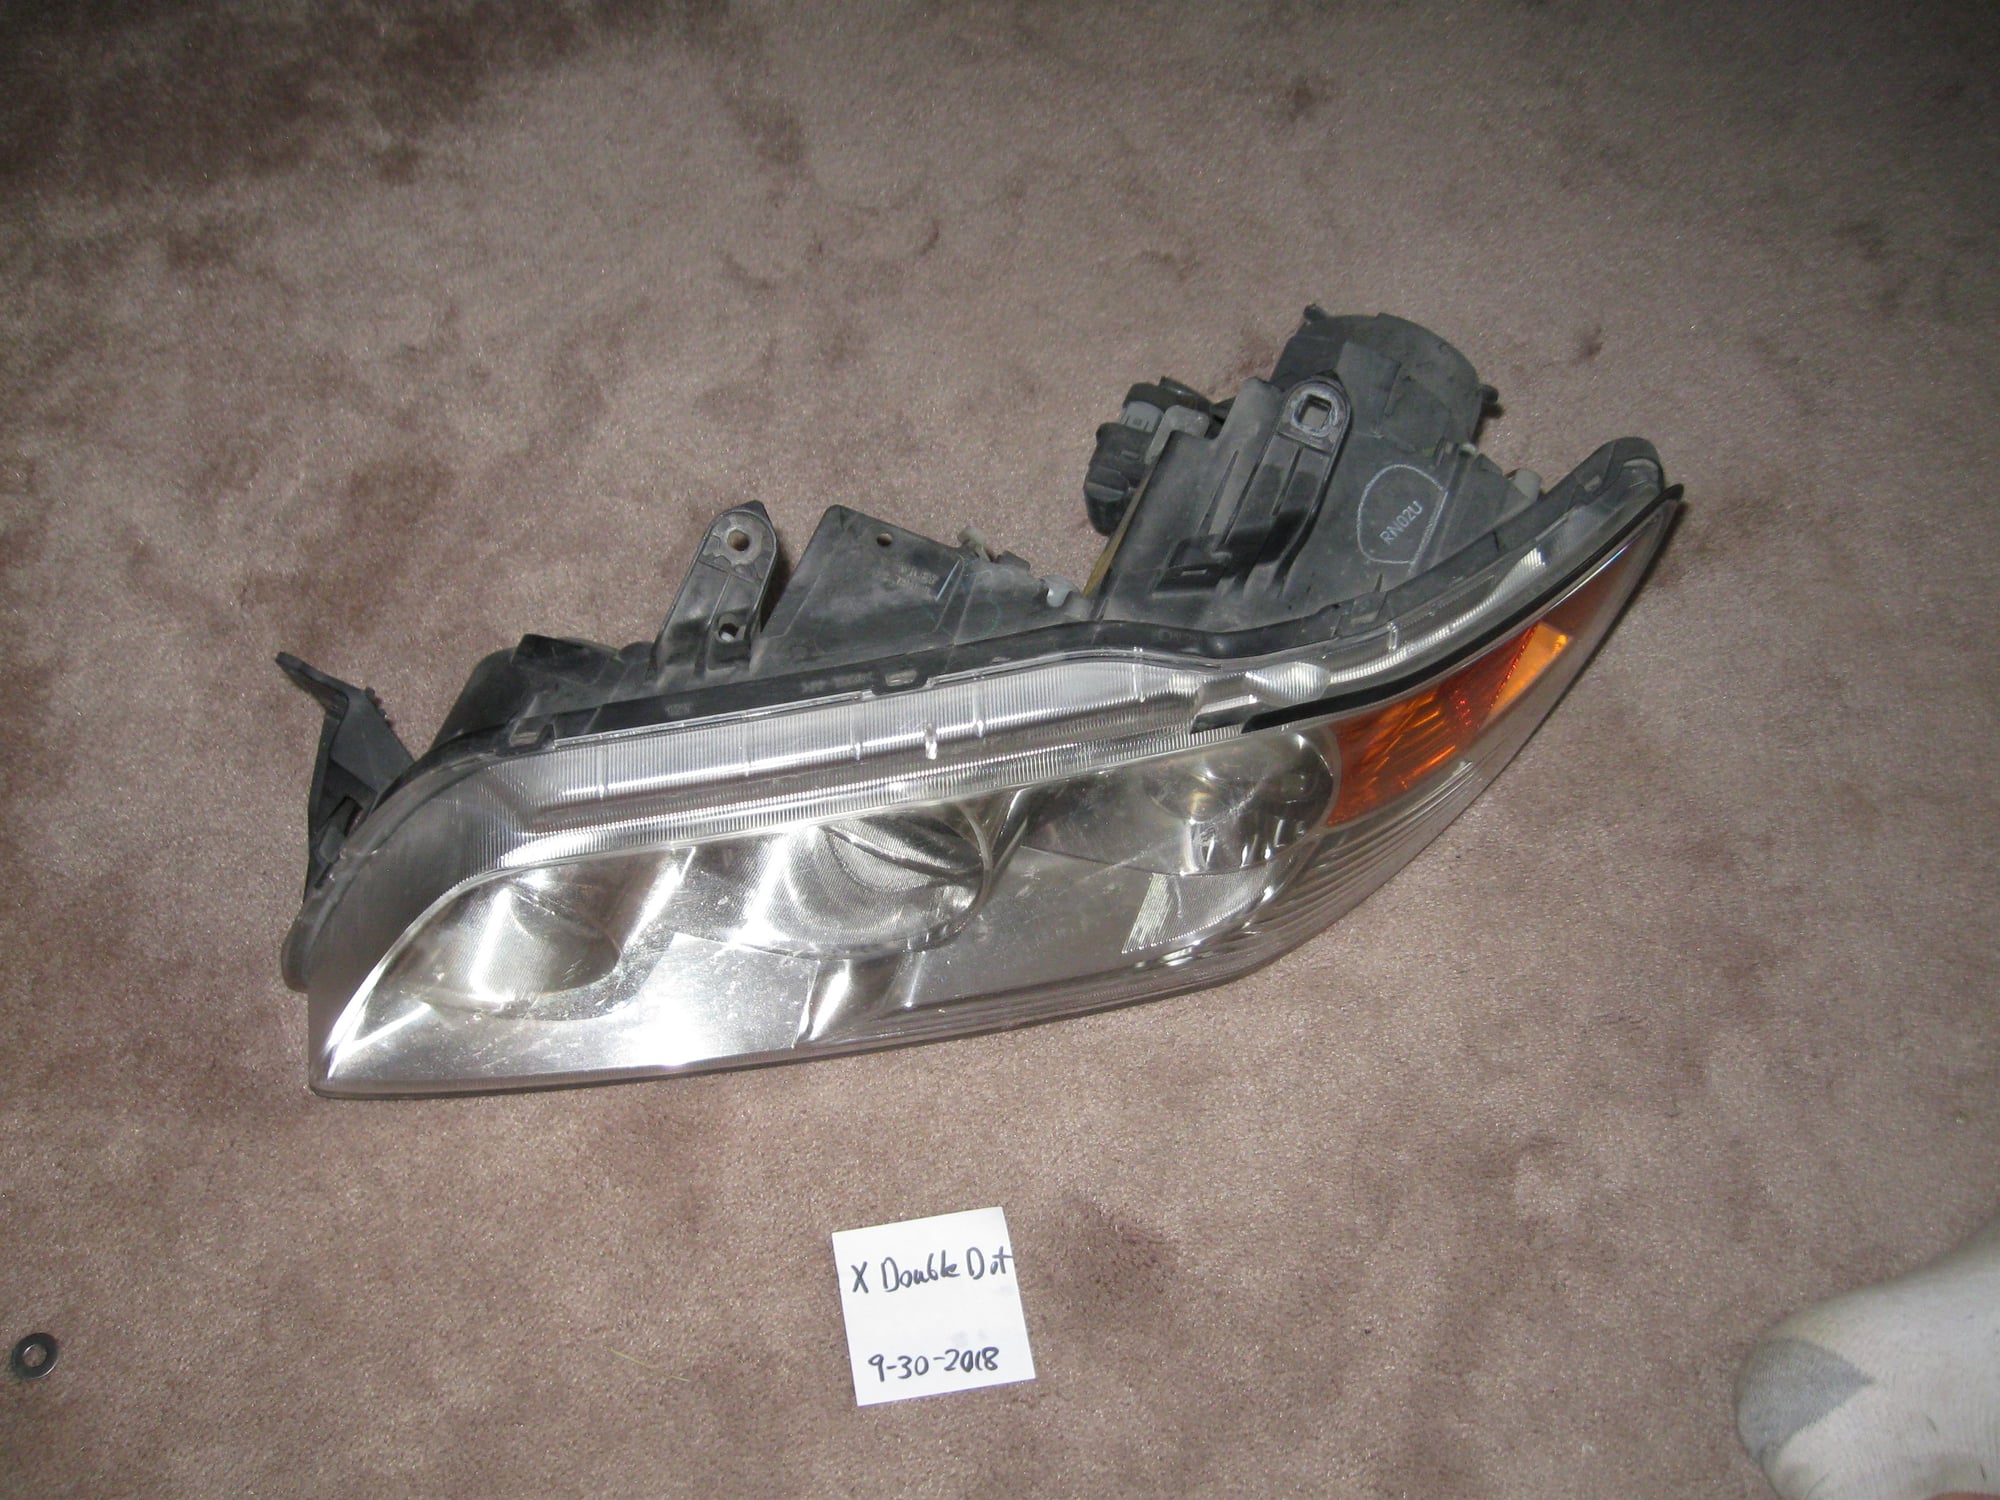 Exterior Body Parts - Drivers Side Evo 8 HID Zexon headlight - Used - 2003 to 2005 Mitsubishi Lancer Evolution - Blacksburg, VA 24060, United States